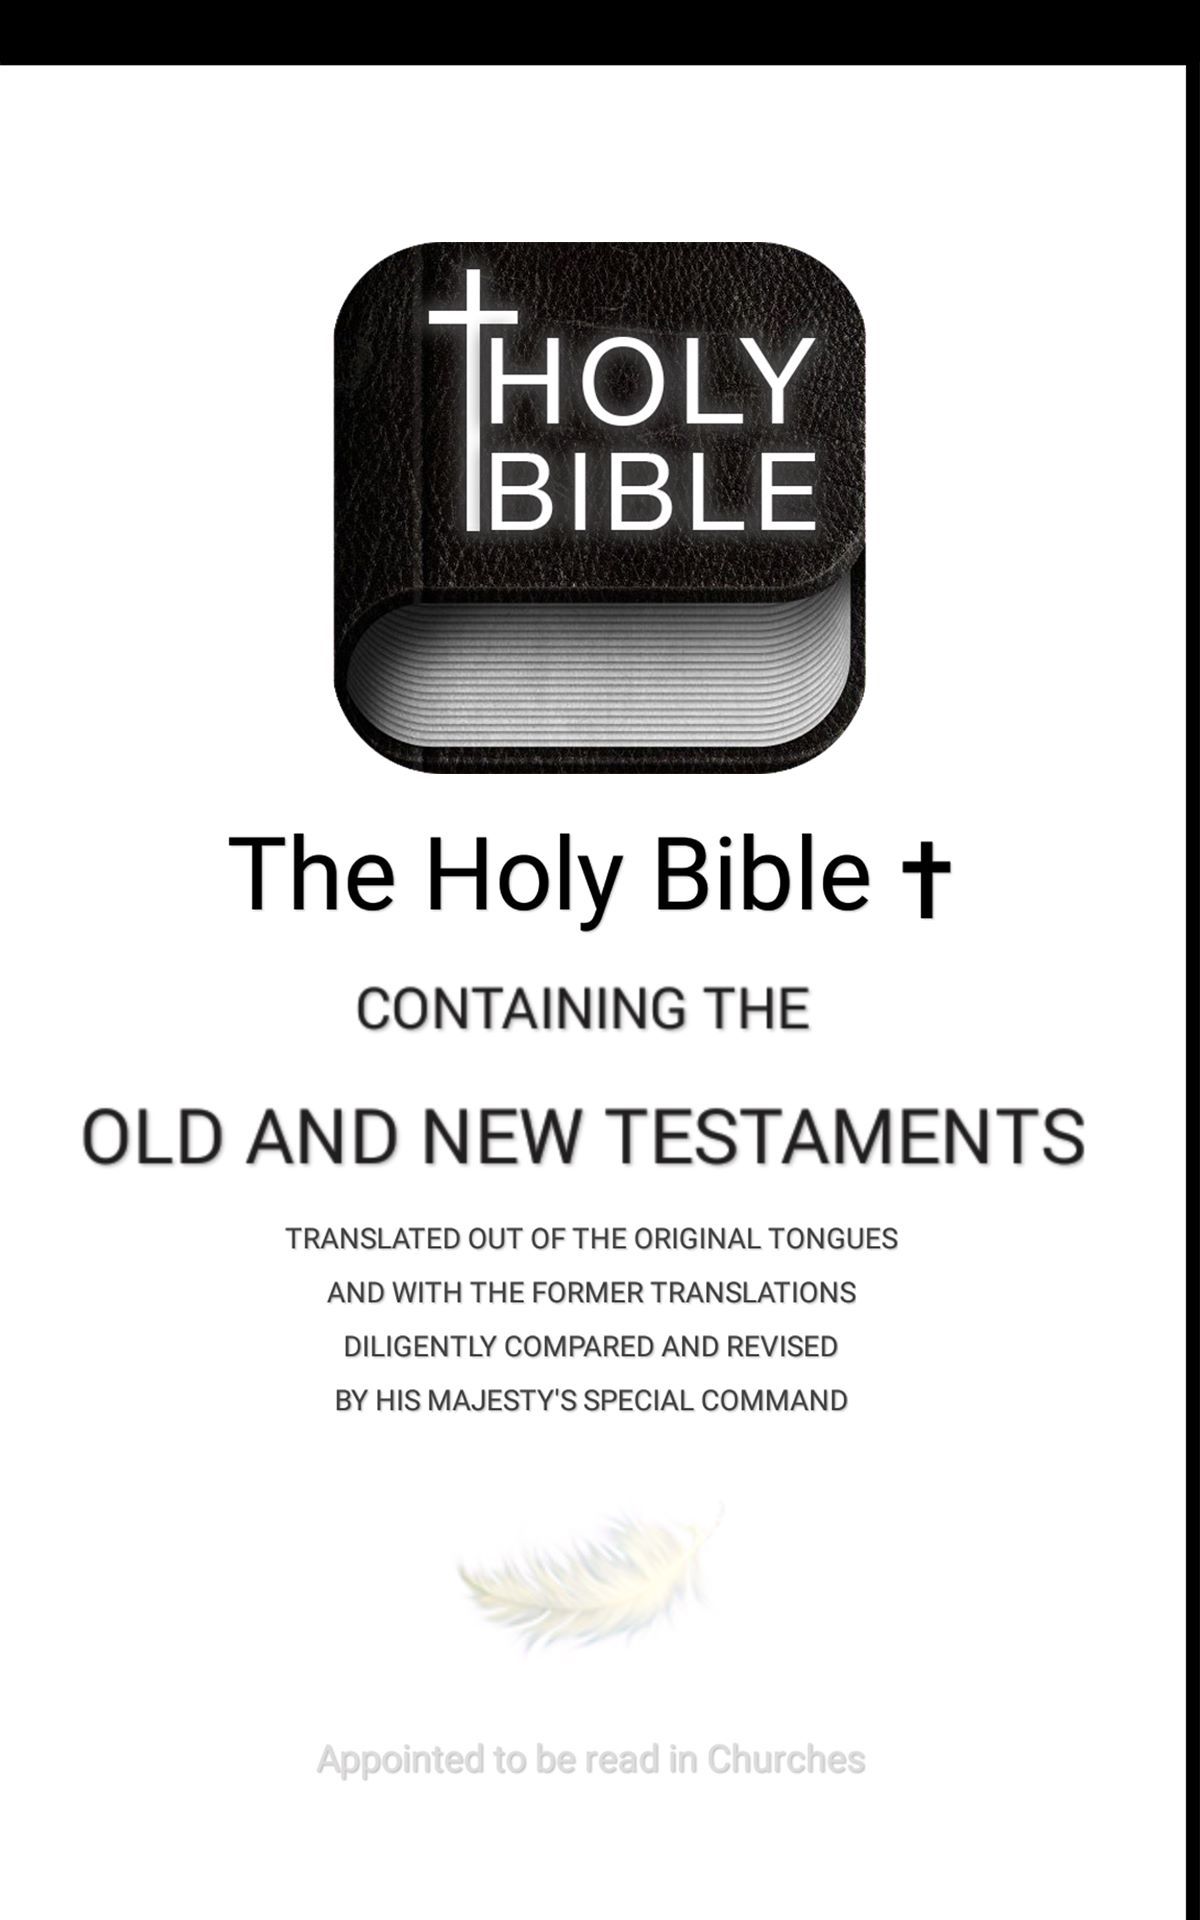 Holy bible app King james version offline - KJV Bible gateway apps study for kindle fire free